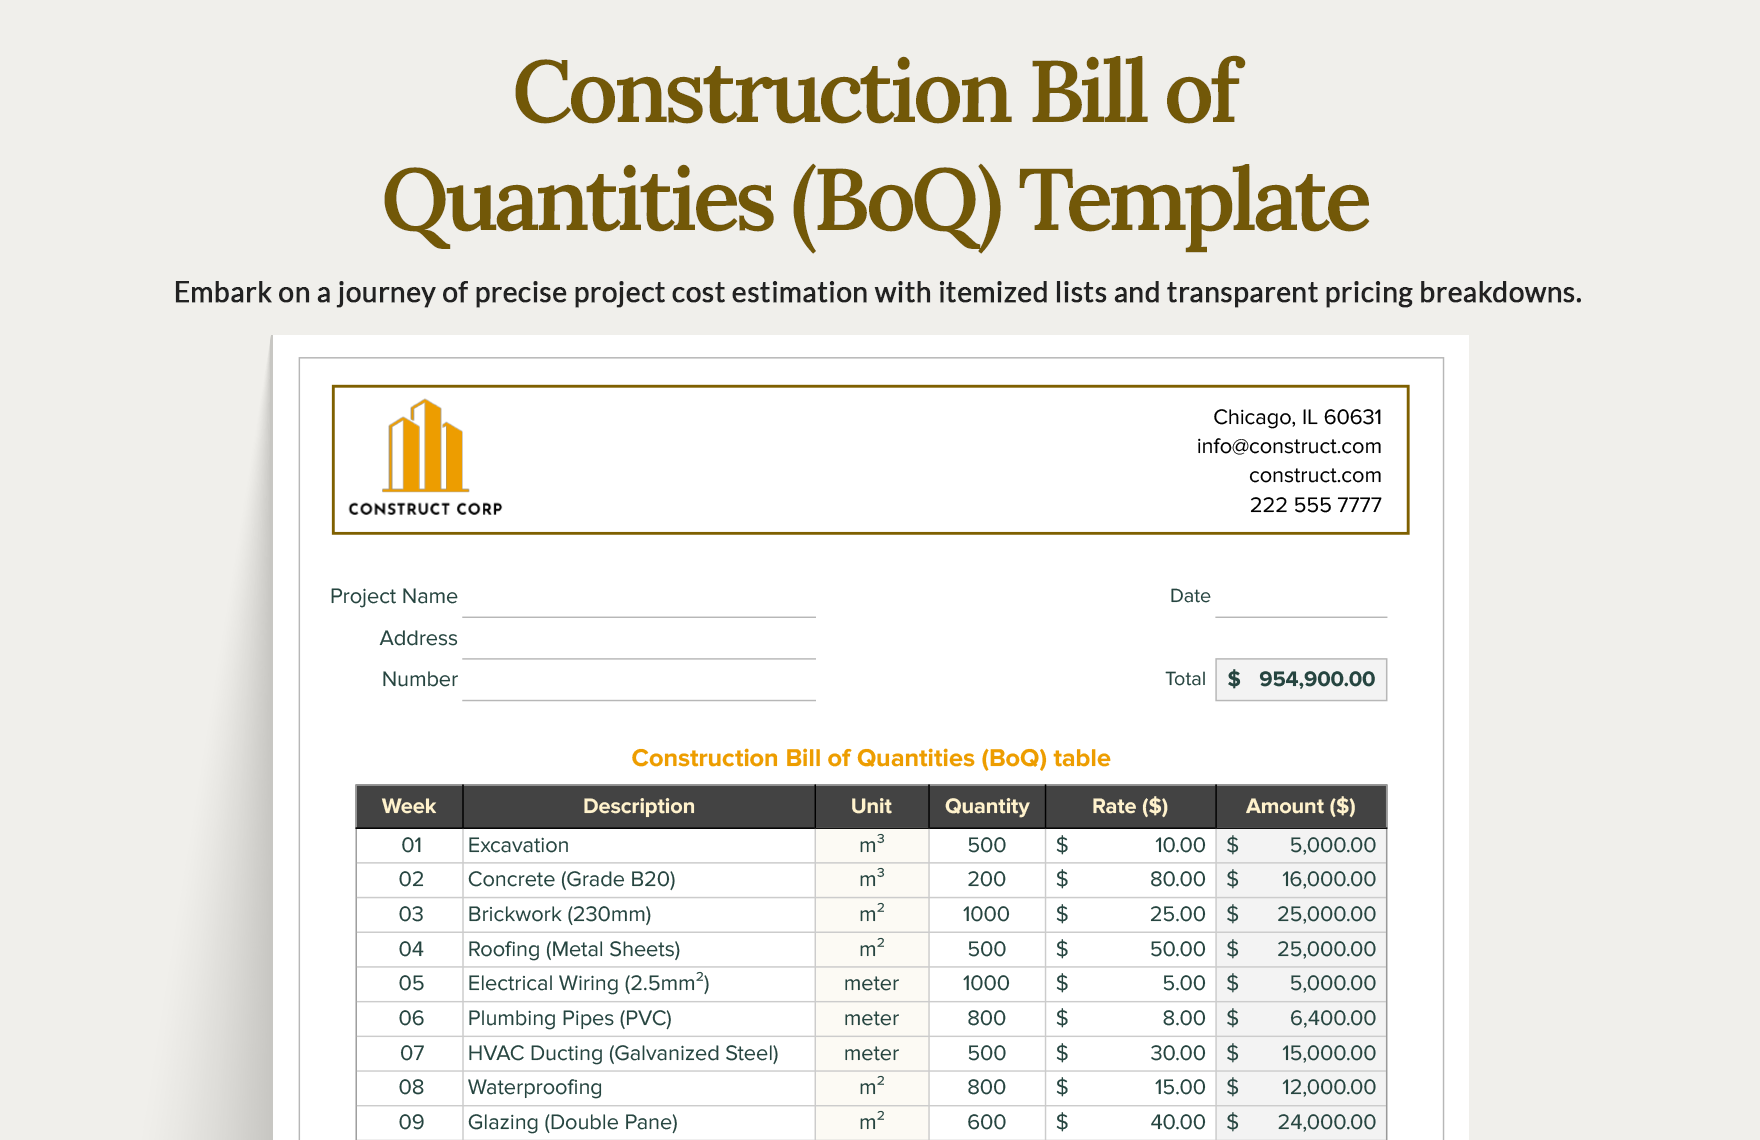 Construction Bill of Quantities (BoQ) Template